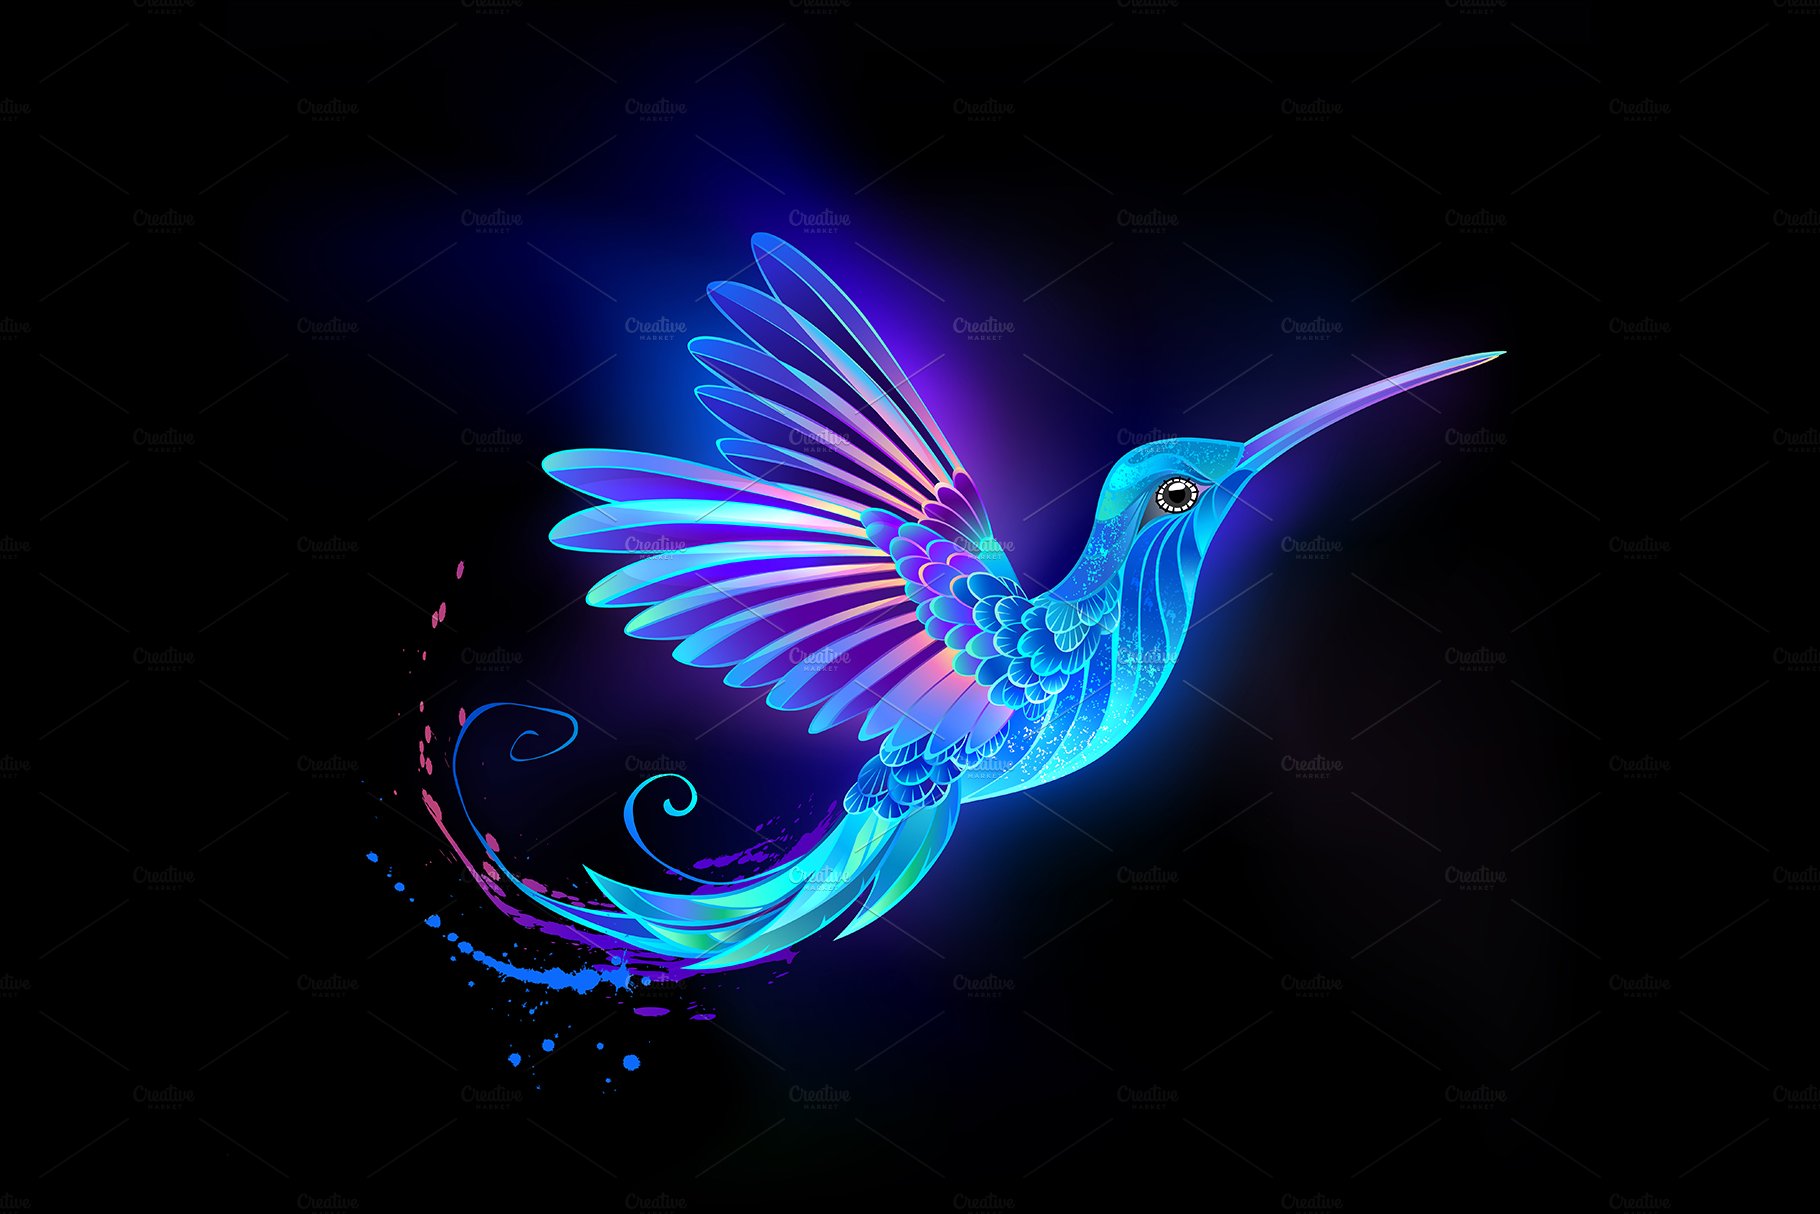 Neon Hummingbird cover image.